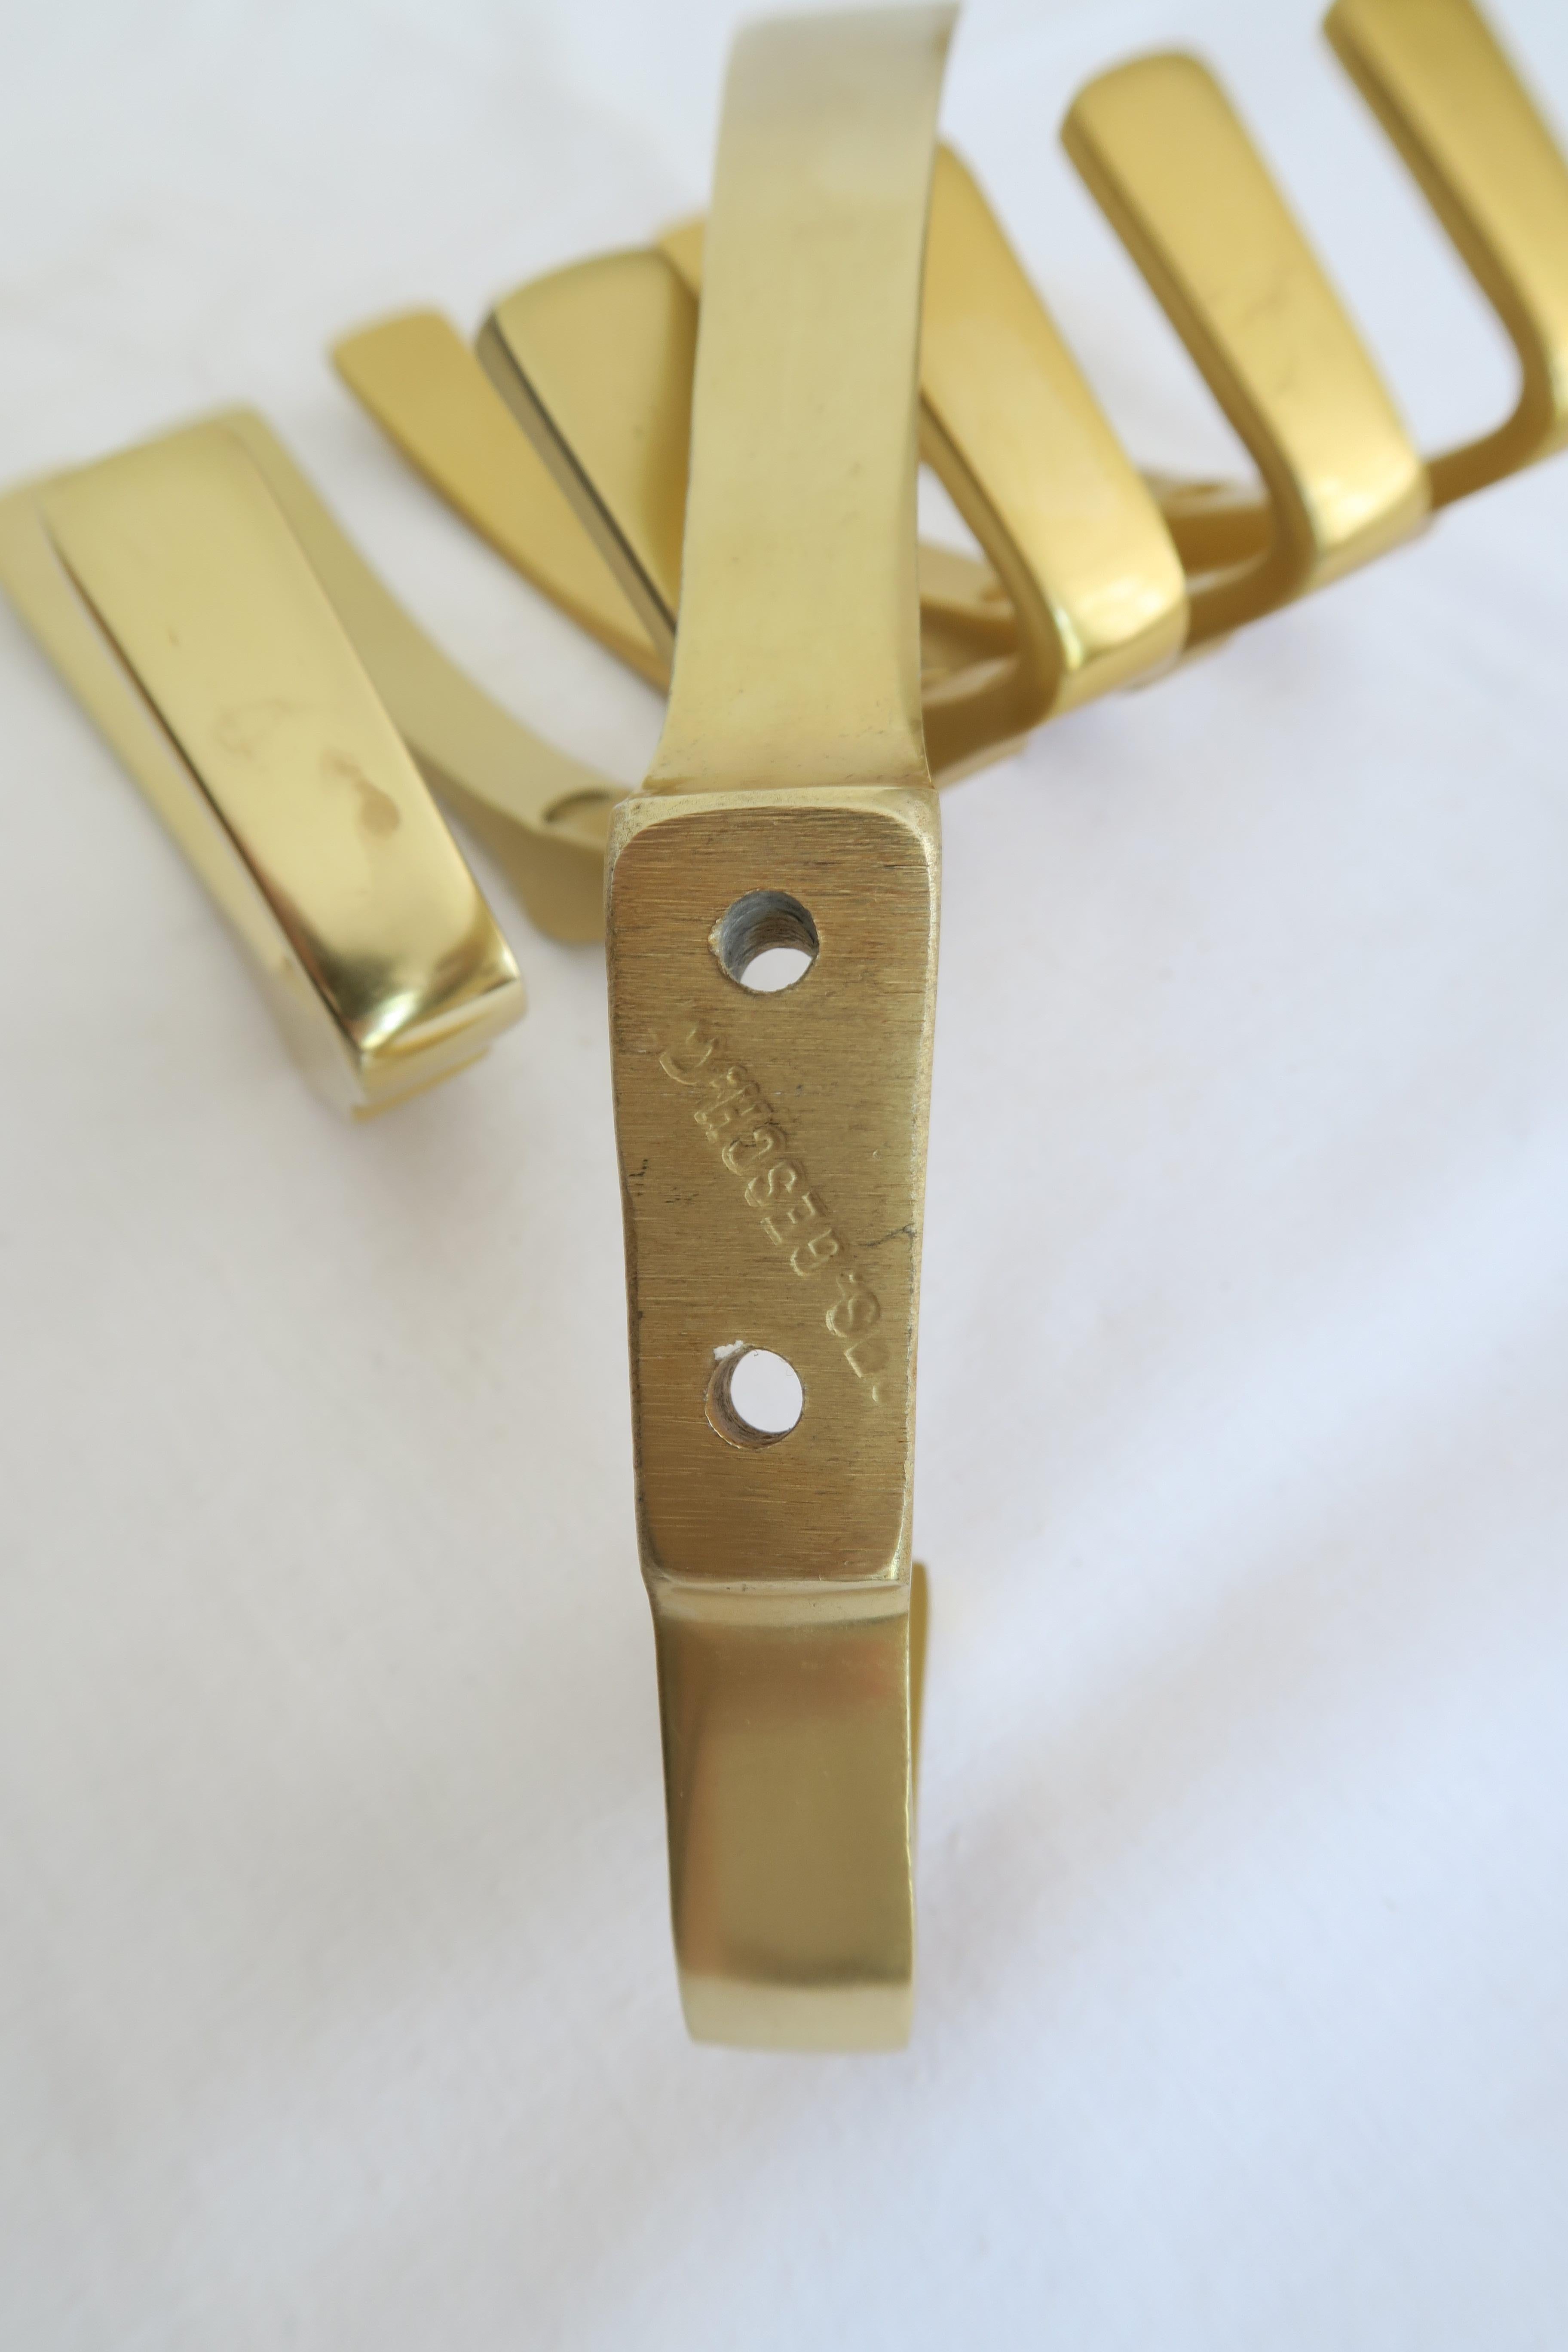 Set aus sechs goldfarbenen Aluminium-Mantelhaken  (Handgefertigt) im Angebot